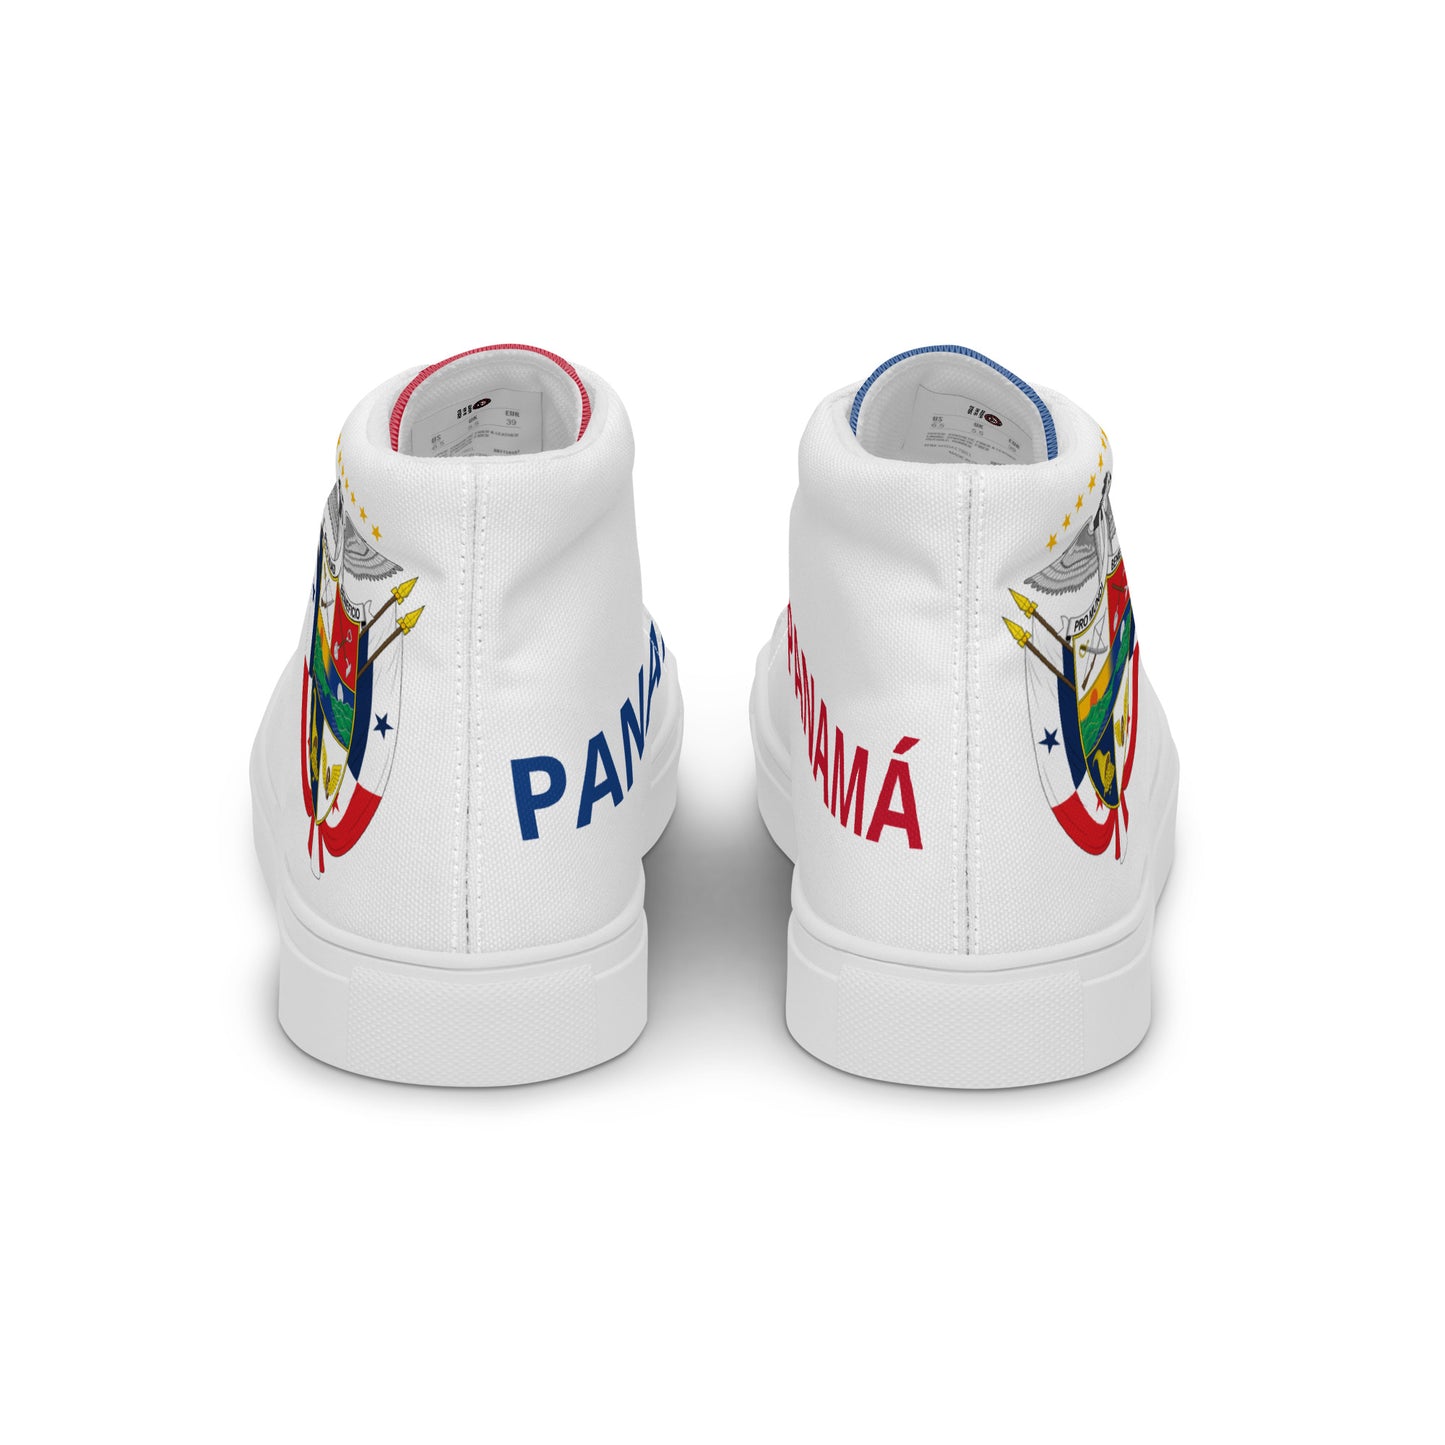 Panamá - Women - White - High top shoes